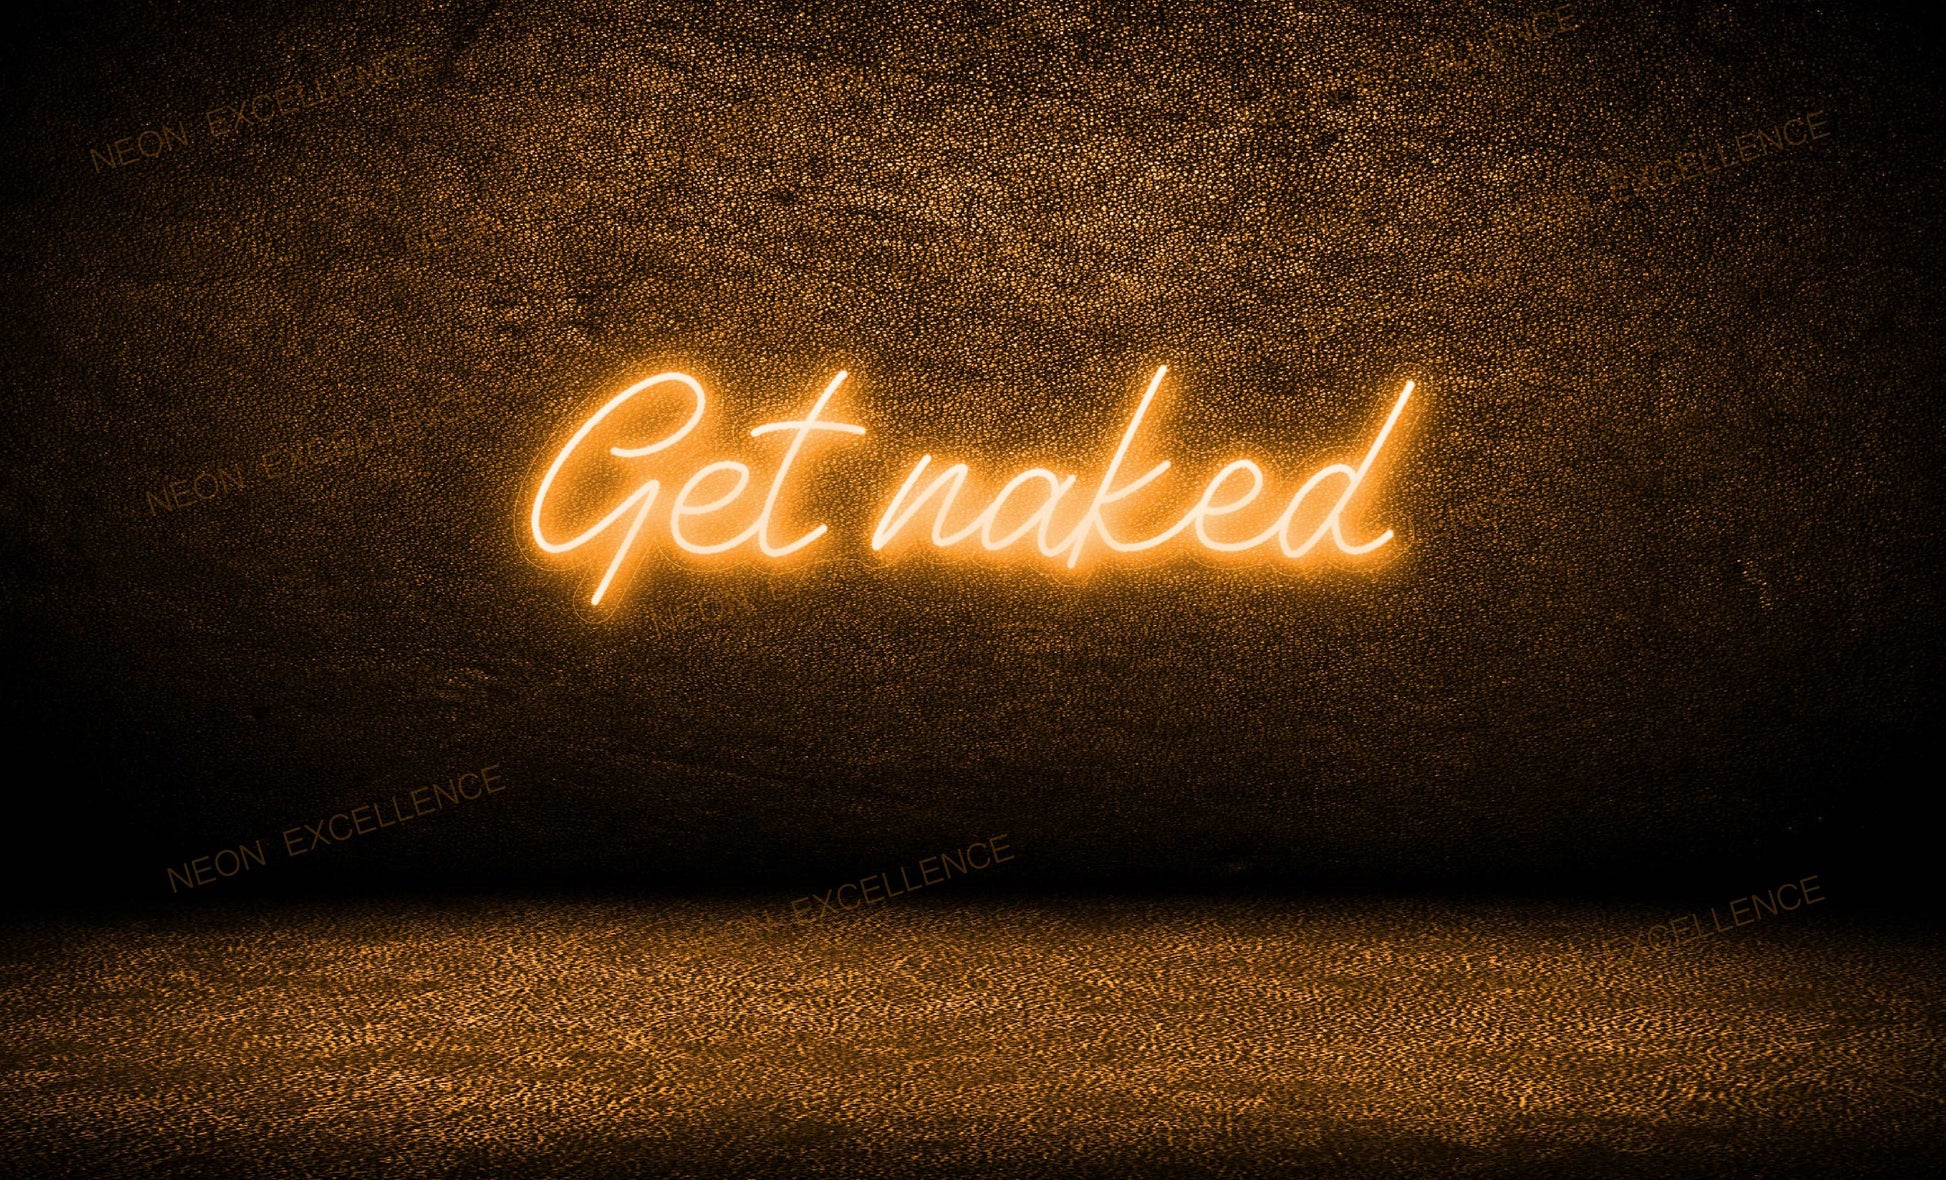 Get Naked LED Neon Sign